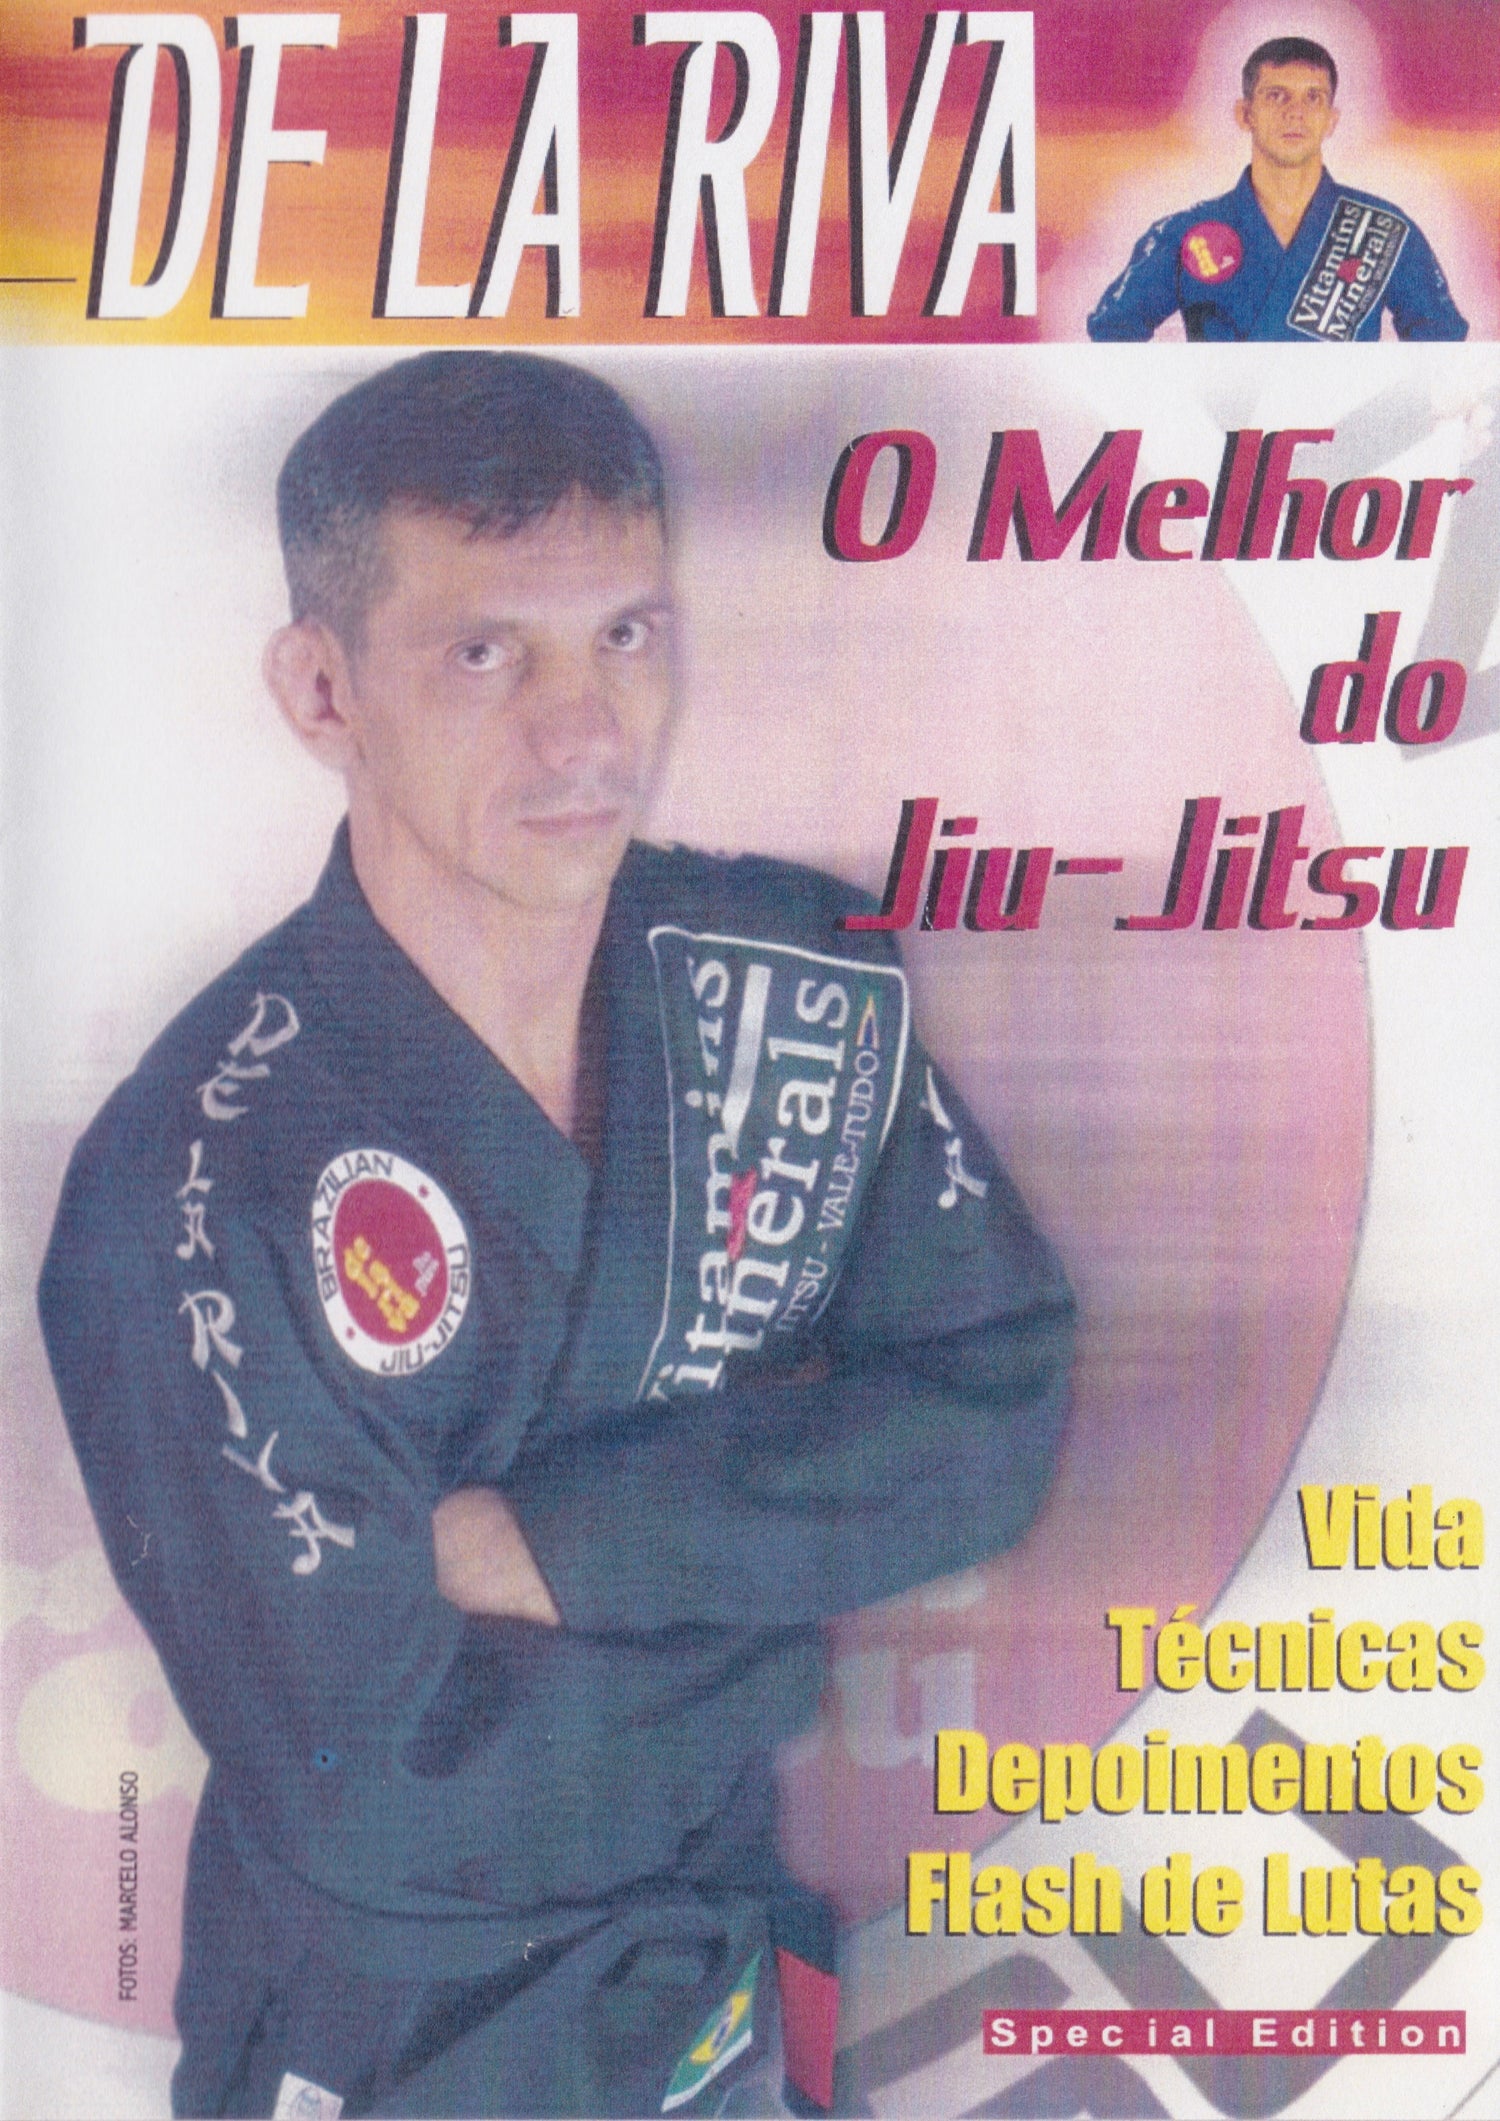 The Best of Jiu-Jitsu DVD by Ricardo De la Riva (Preowned)